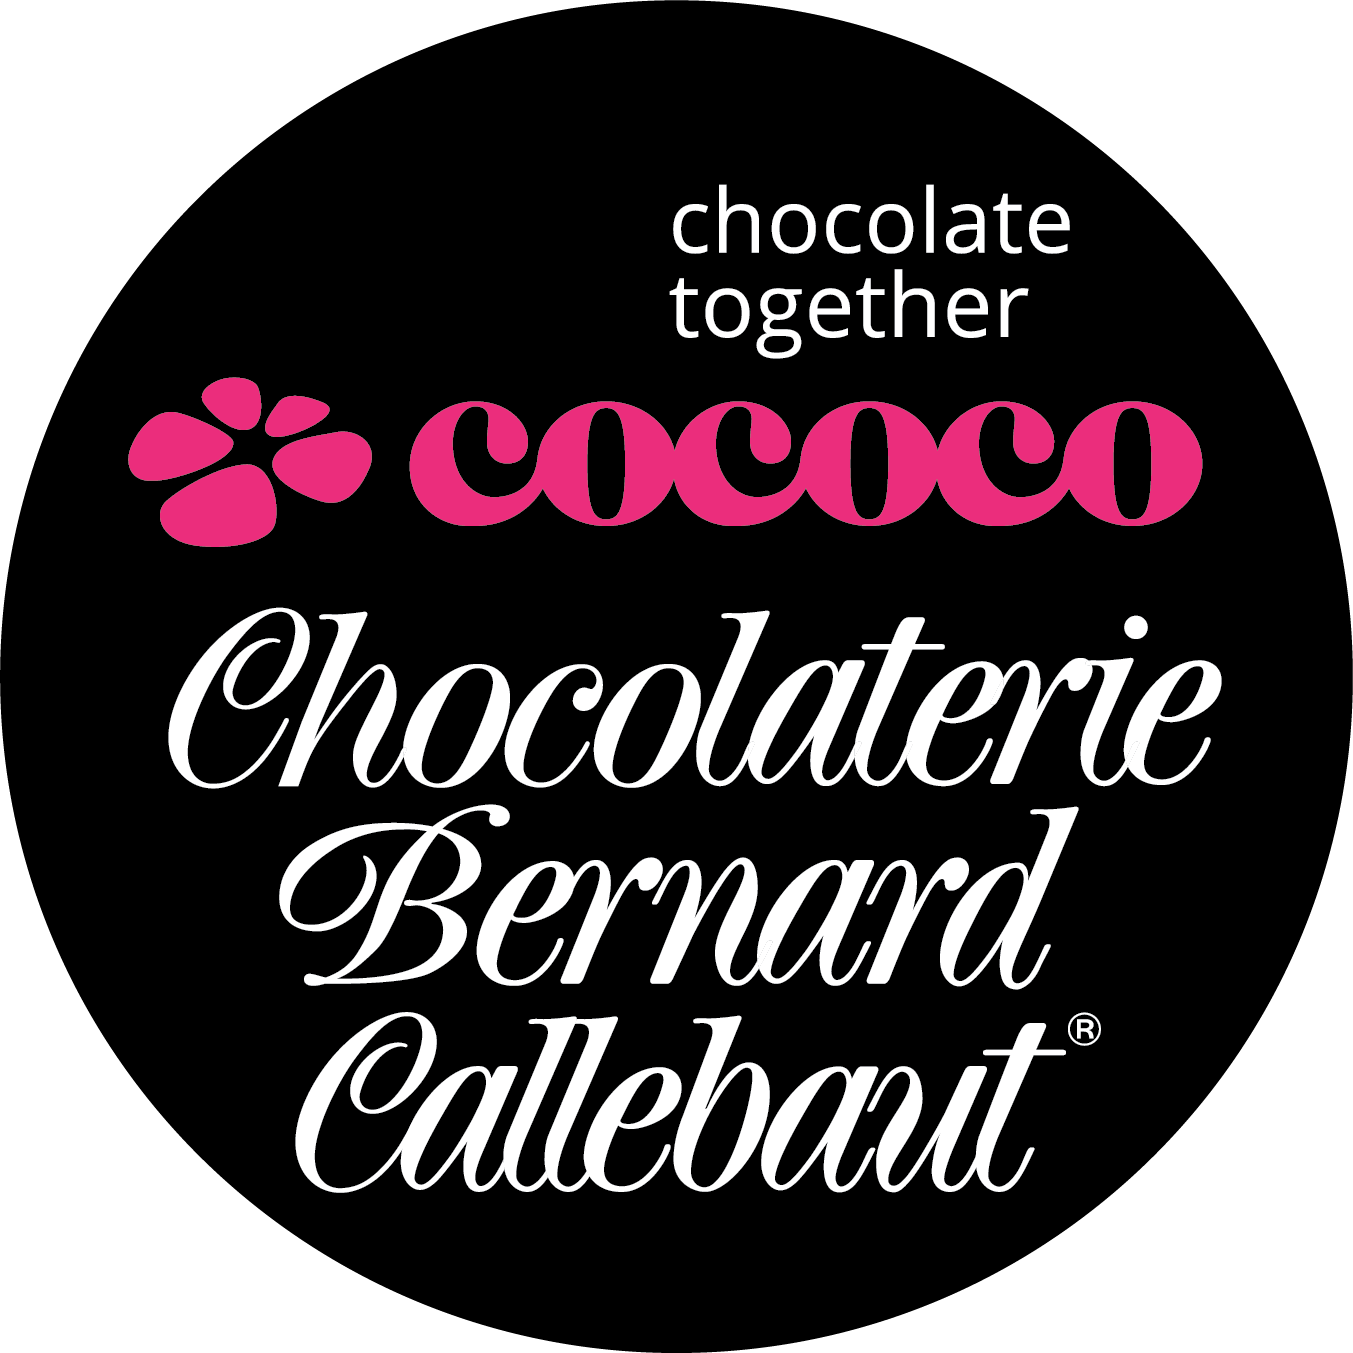 Chocolaterie Bernard Callebaut logo